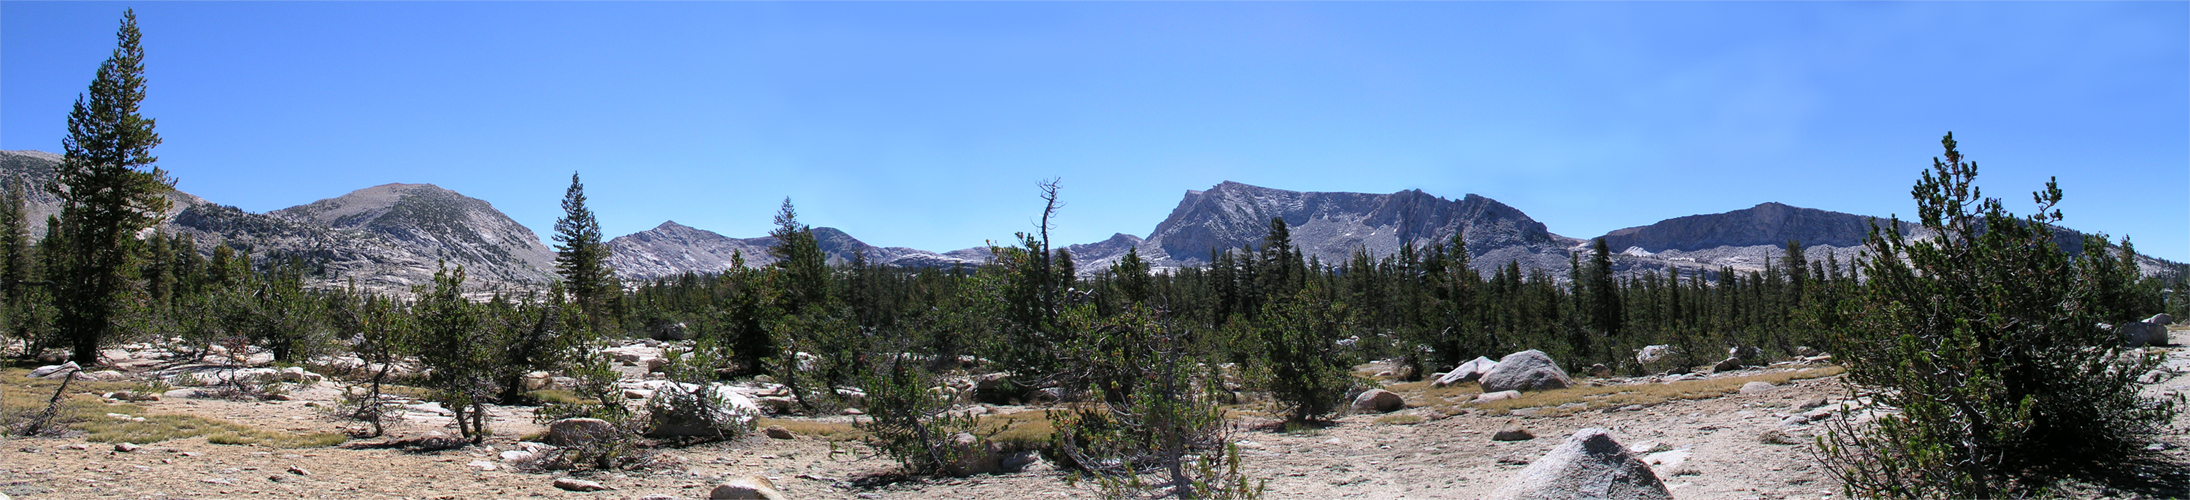 Panorama of Upper Red Mountain Basin, John Muir Wilderness, California